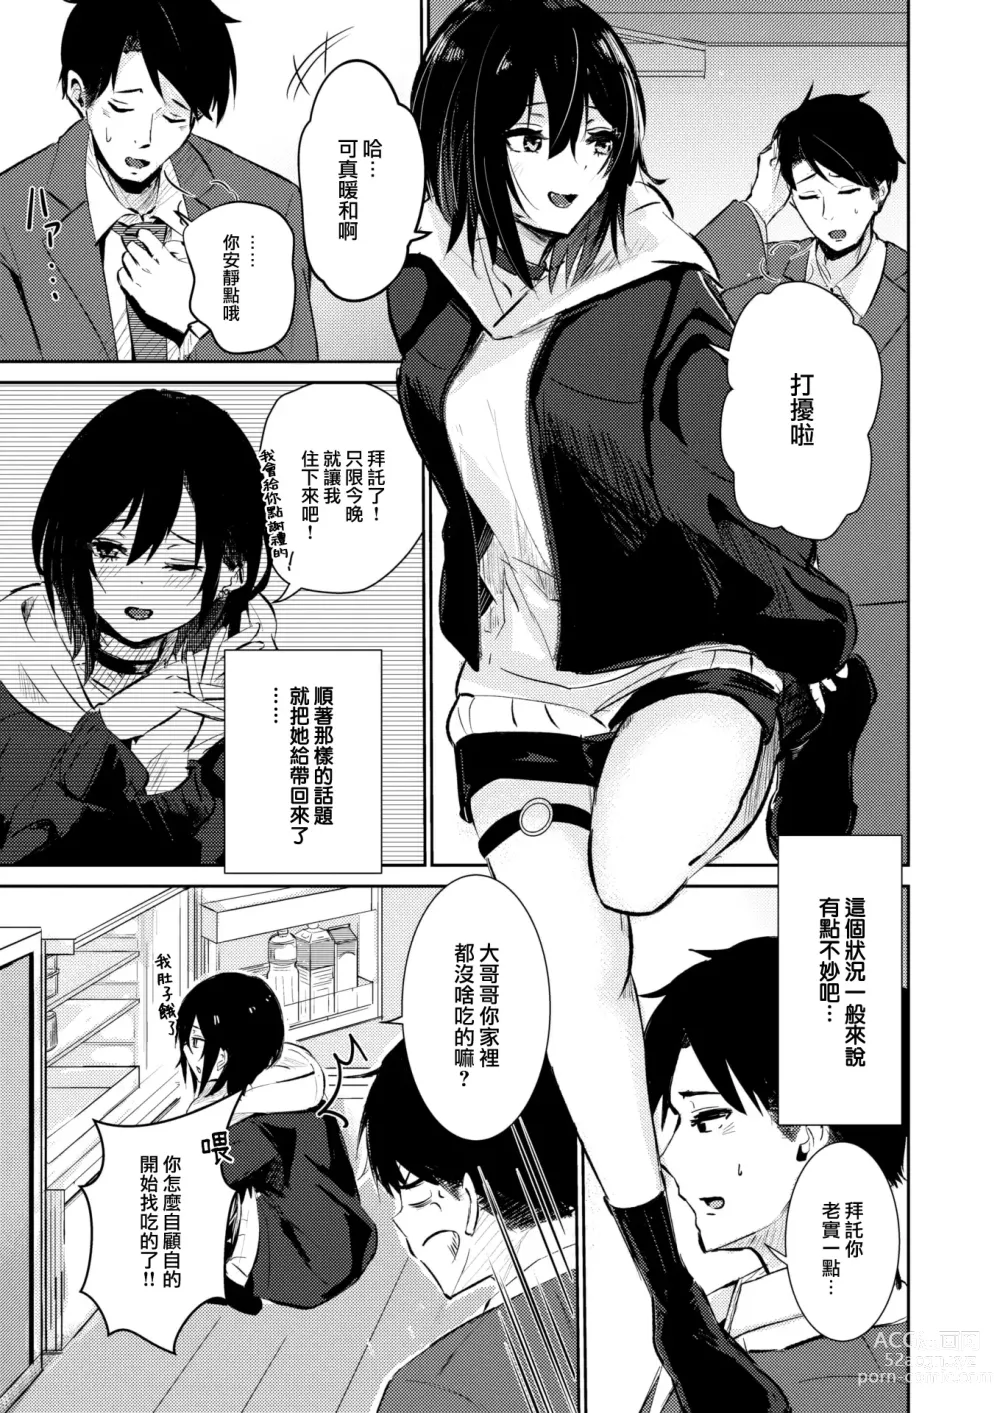 Page 4 of manga Neko to Kimagure